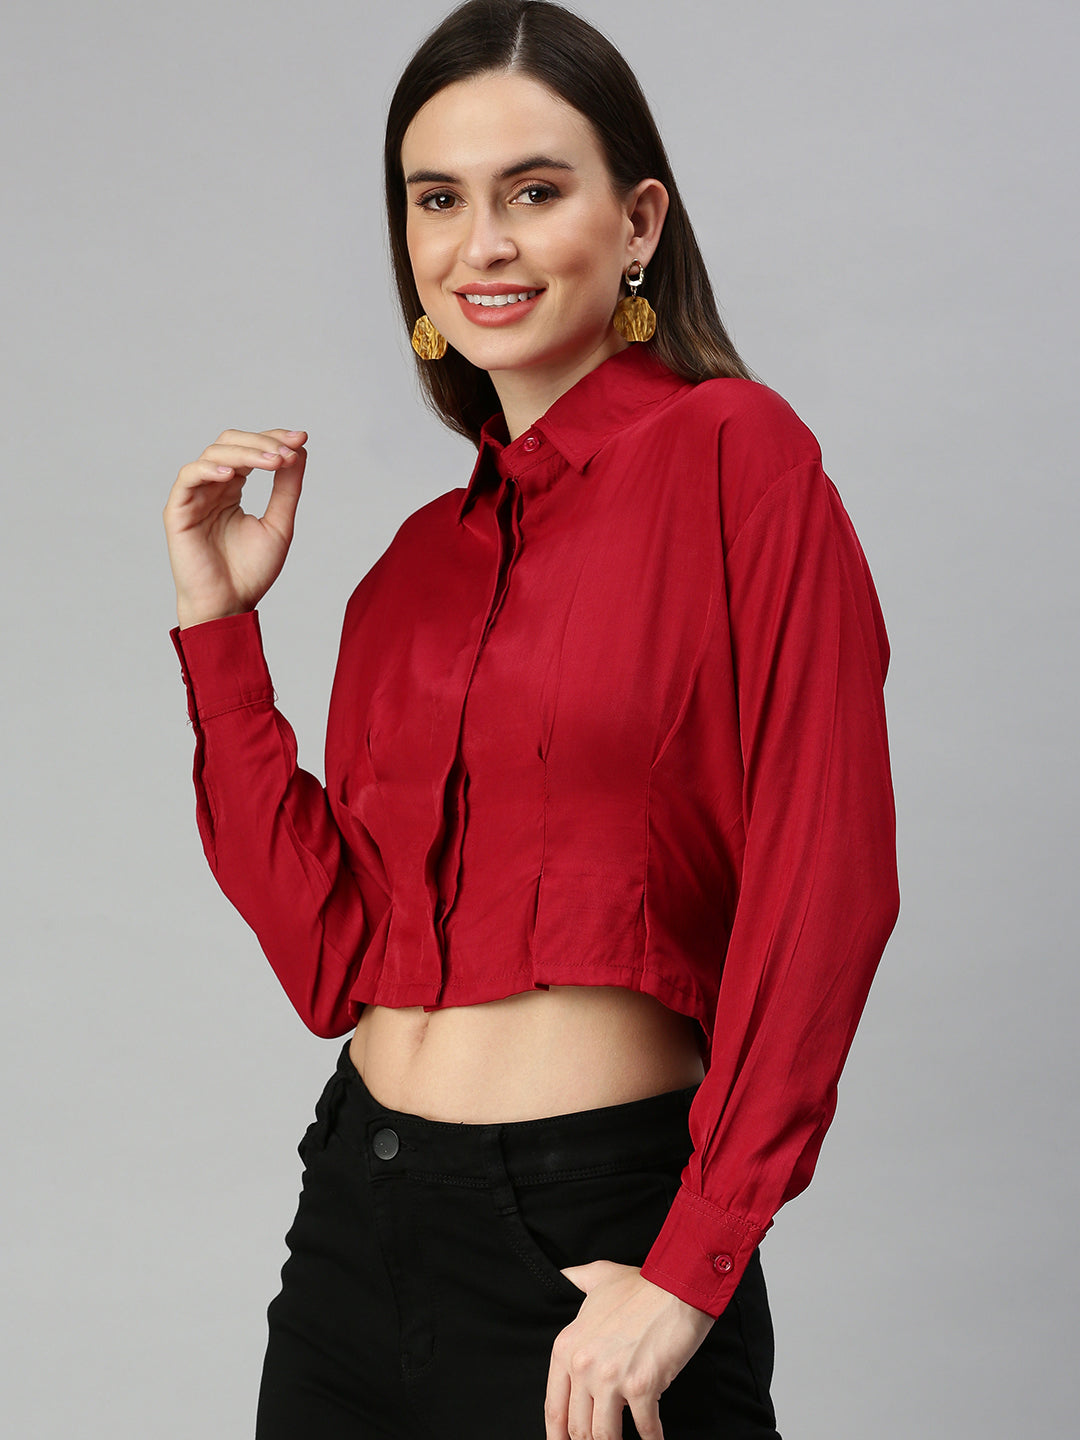 Women's Red Solid Tops